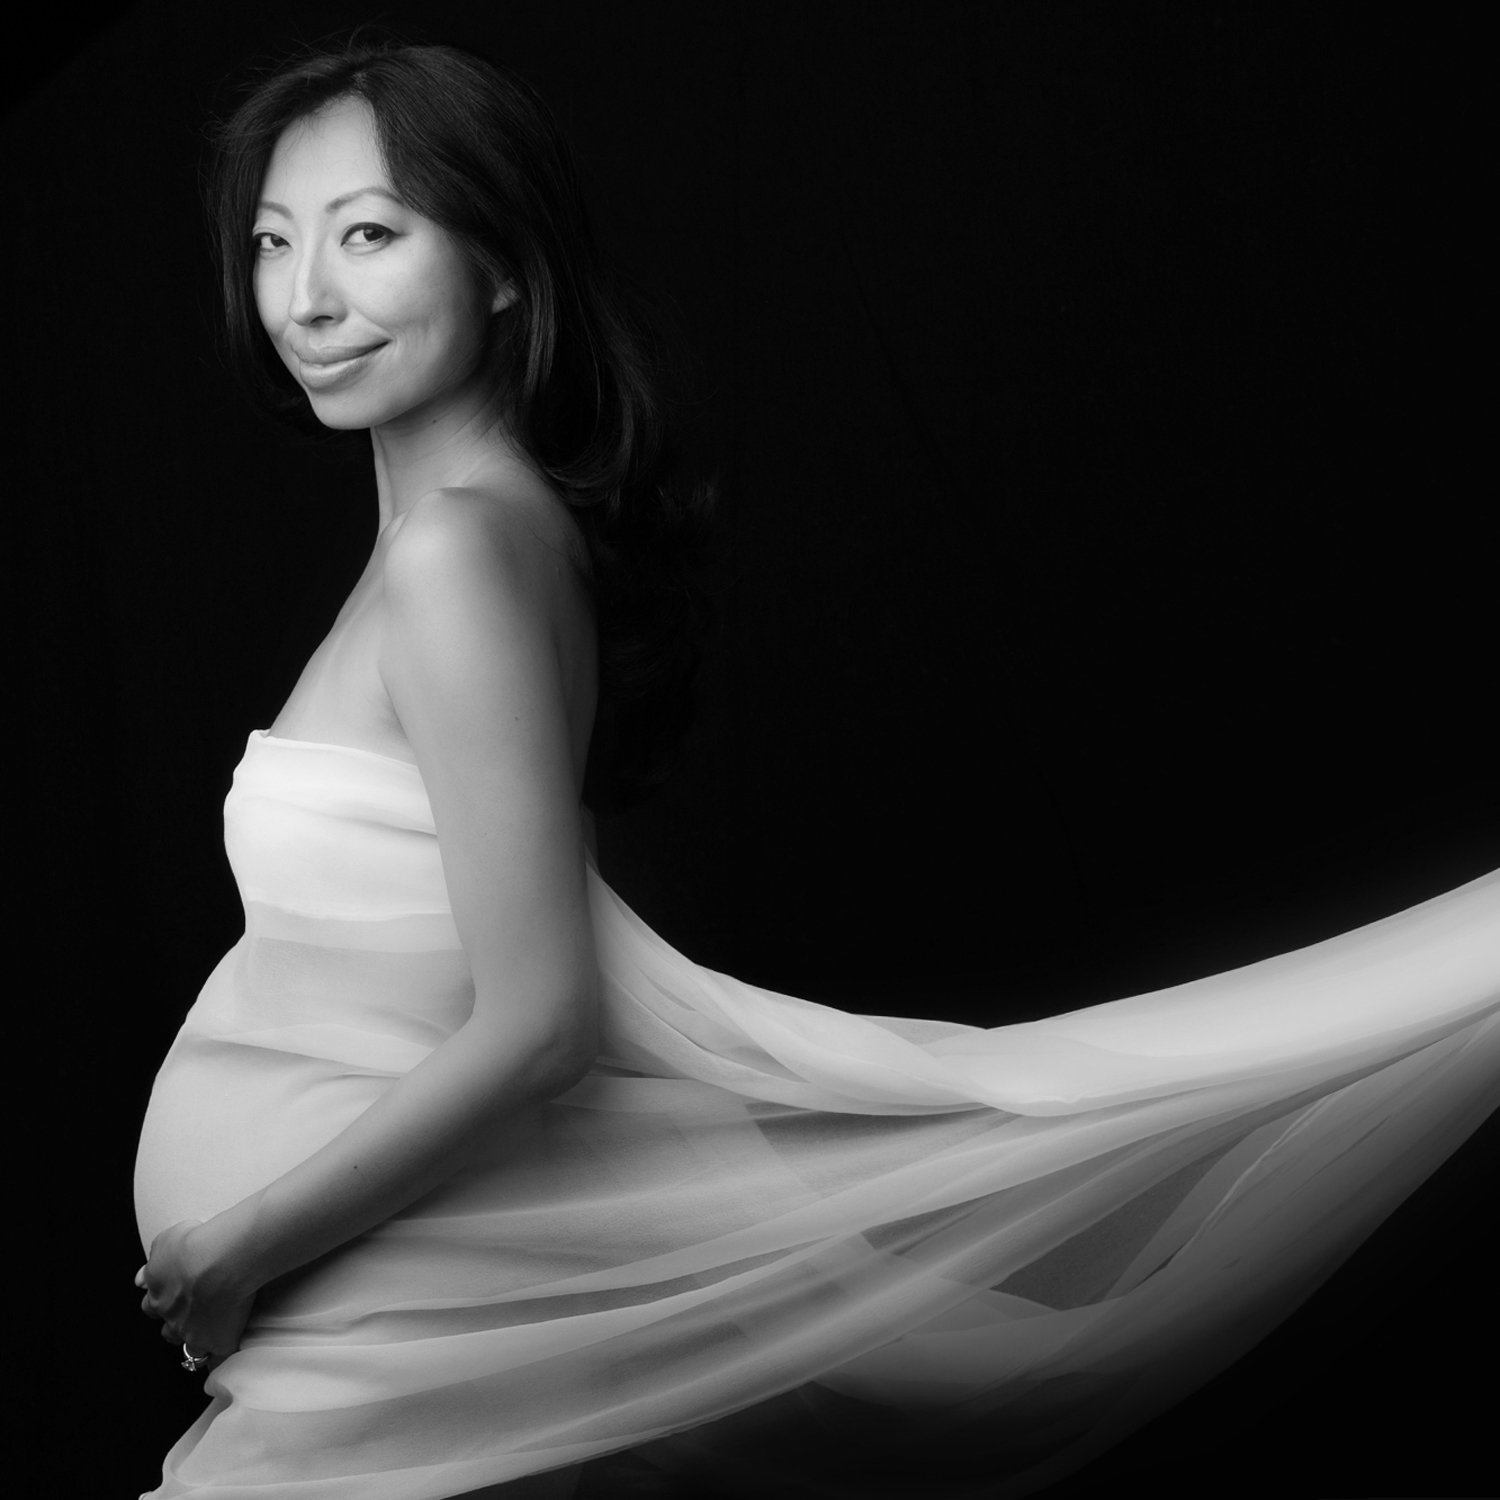 Black and white pregnancy photogarphy